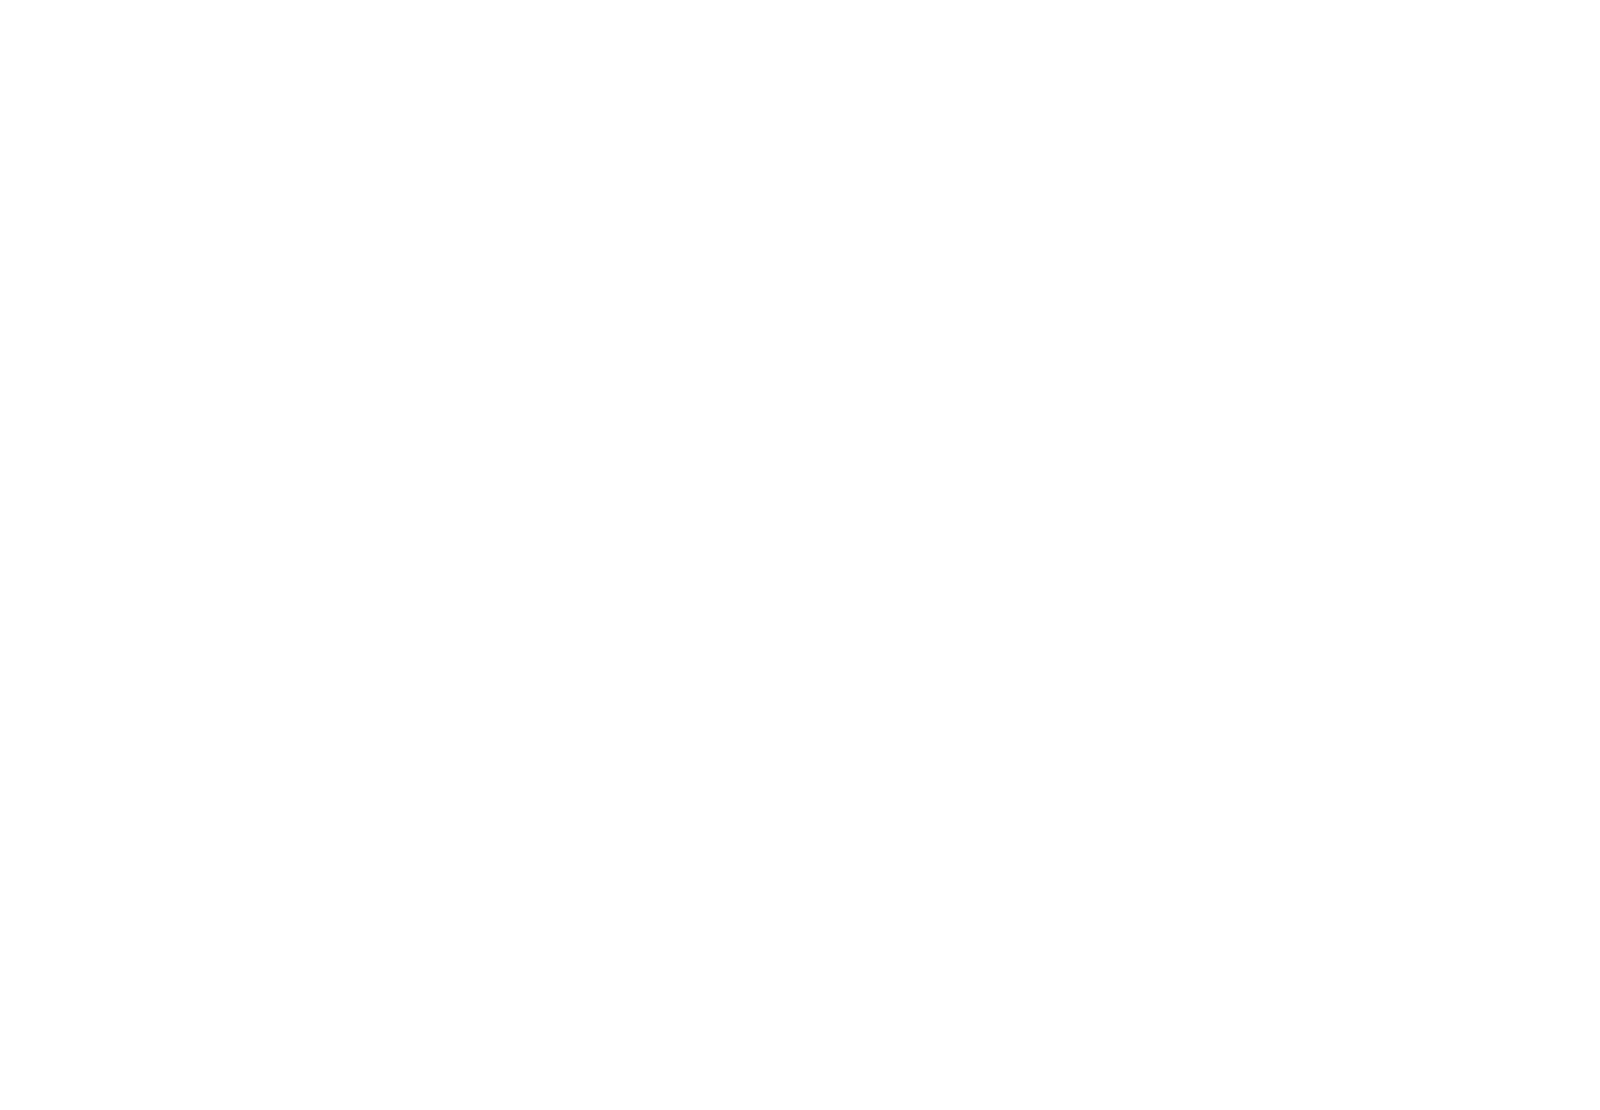 milet、TVアニメ『ヴィンランド・サガ』エンディング・テーマ「Drown」のティザー映像を公開サムネイル画像!